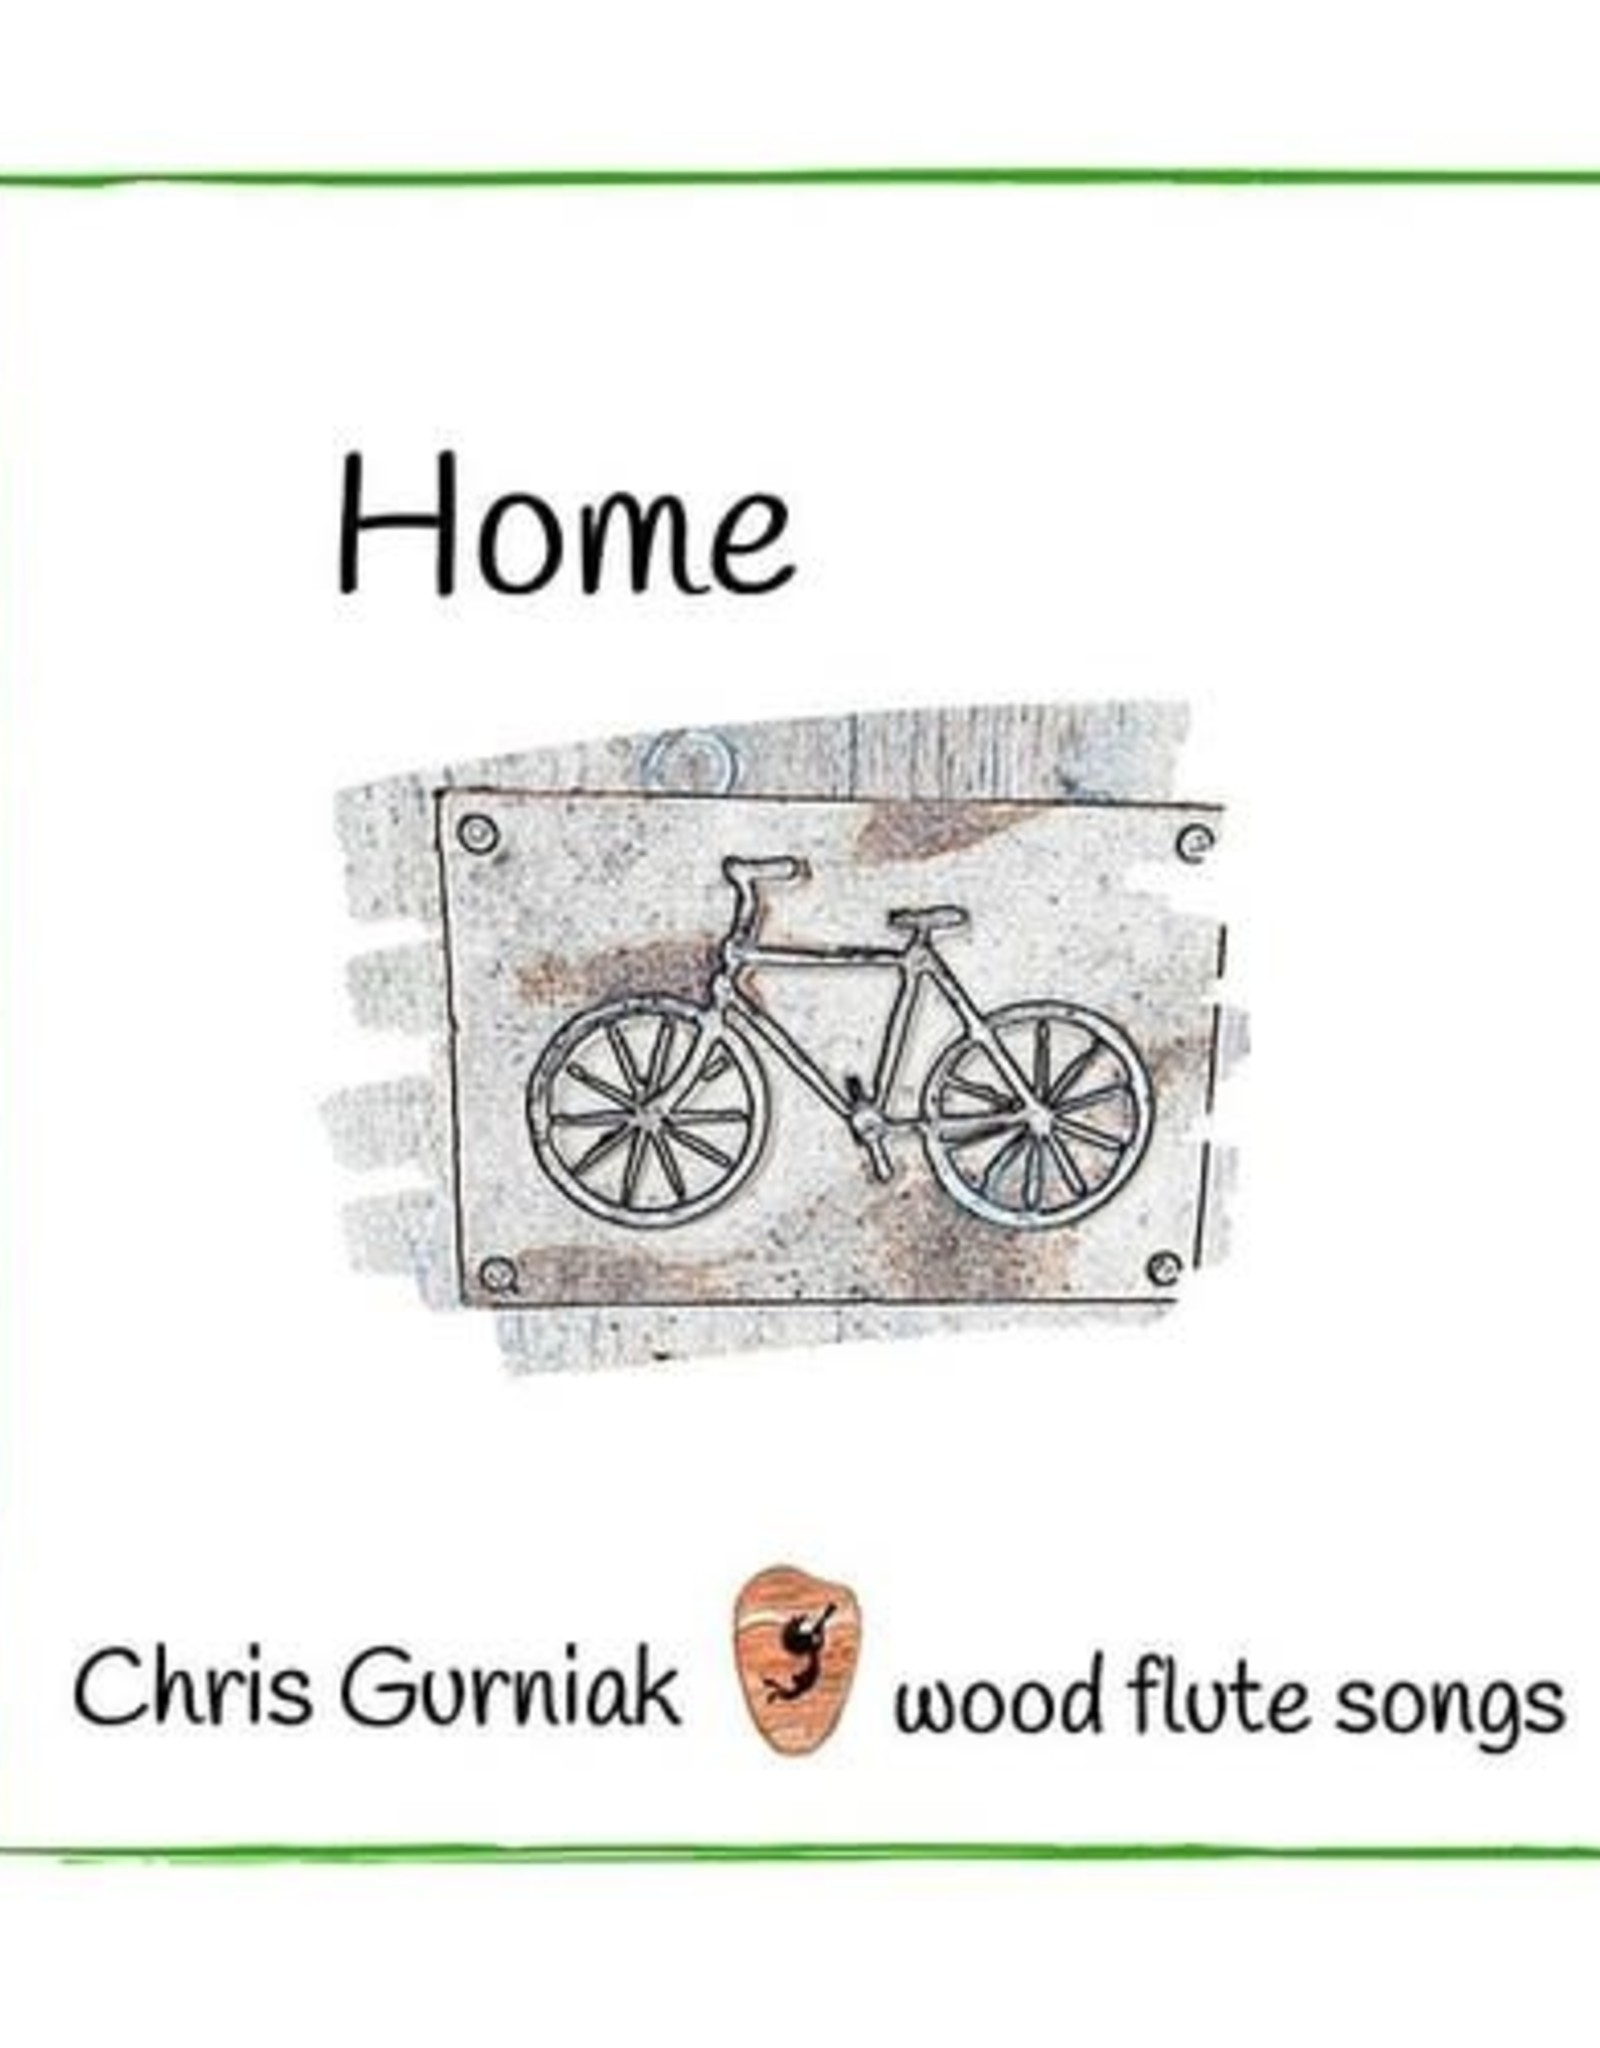 Chris Gurniak Home CD by Chris Gurniak